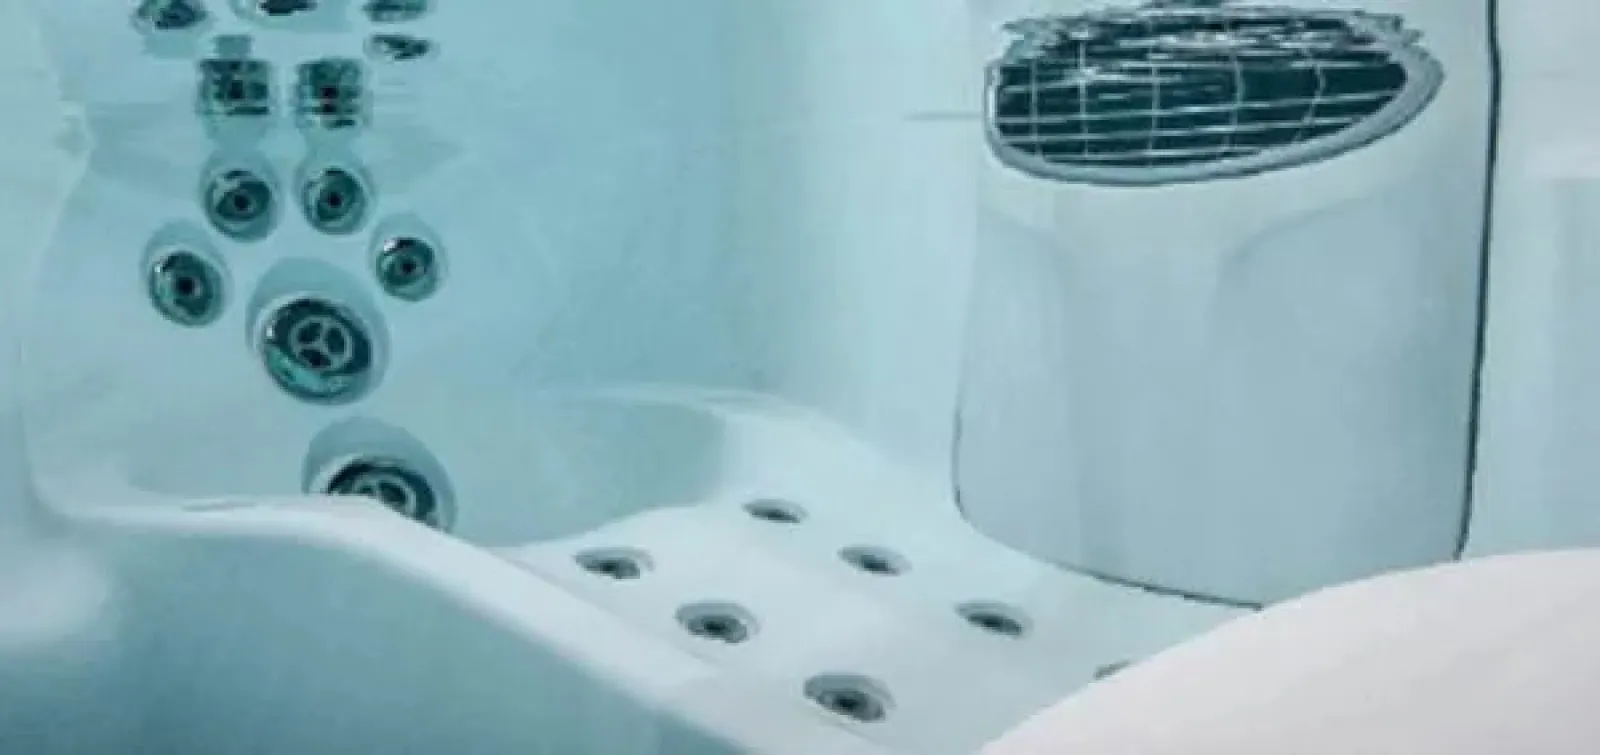 inside of a hot tub